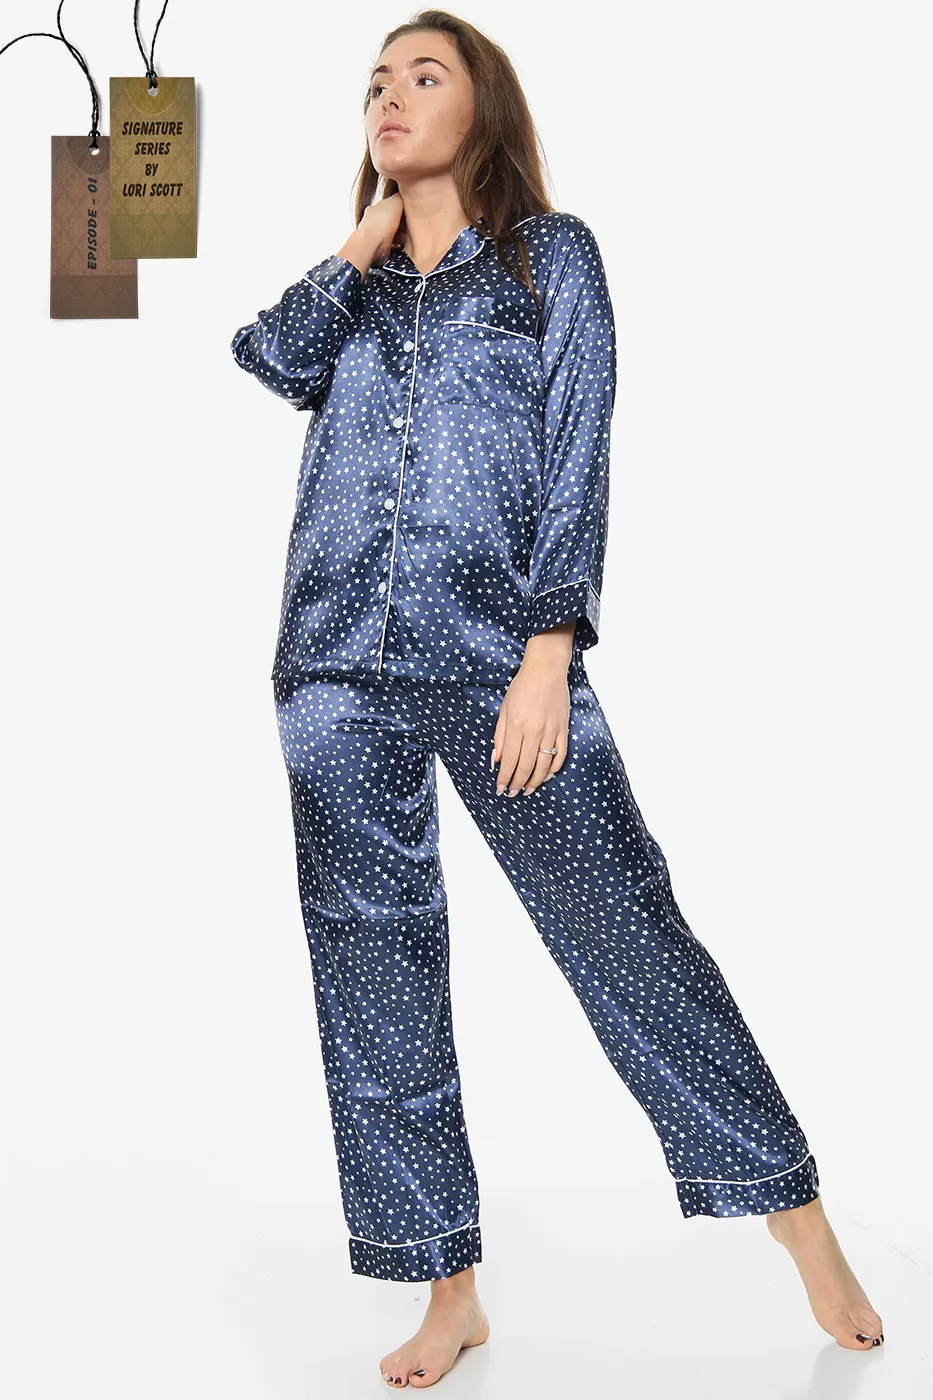 Valerie Nightwear Satin Pajama Set (Lori Scott Signature Series) Feel cute while Staying Comfortable Putting this on every night